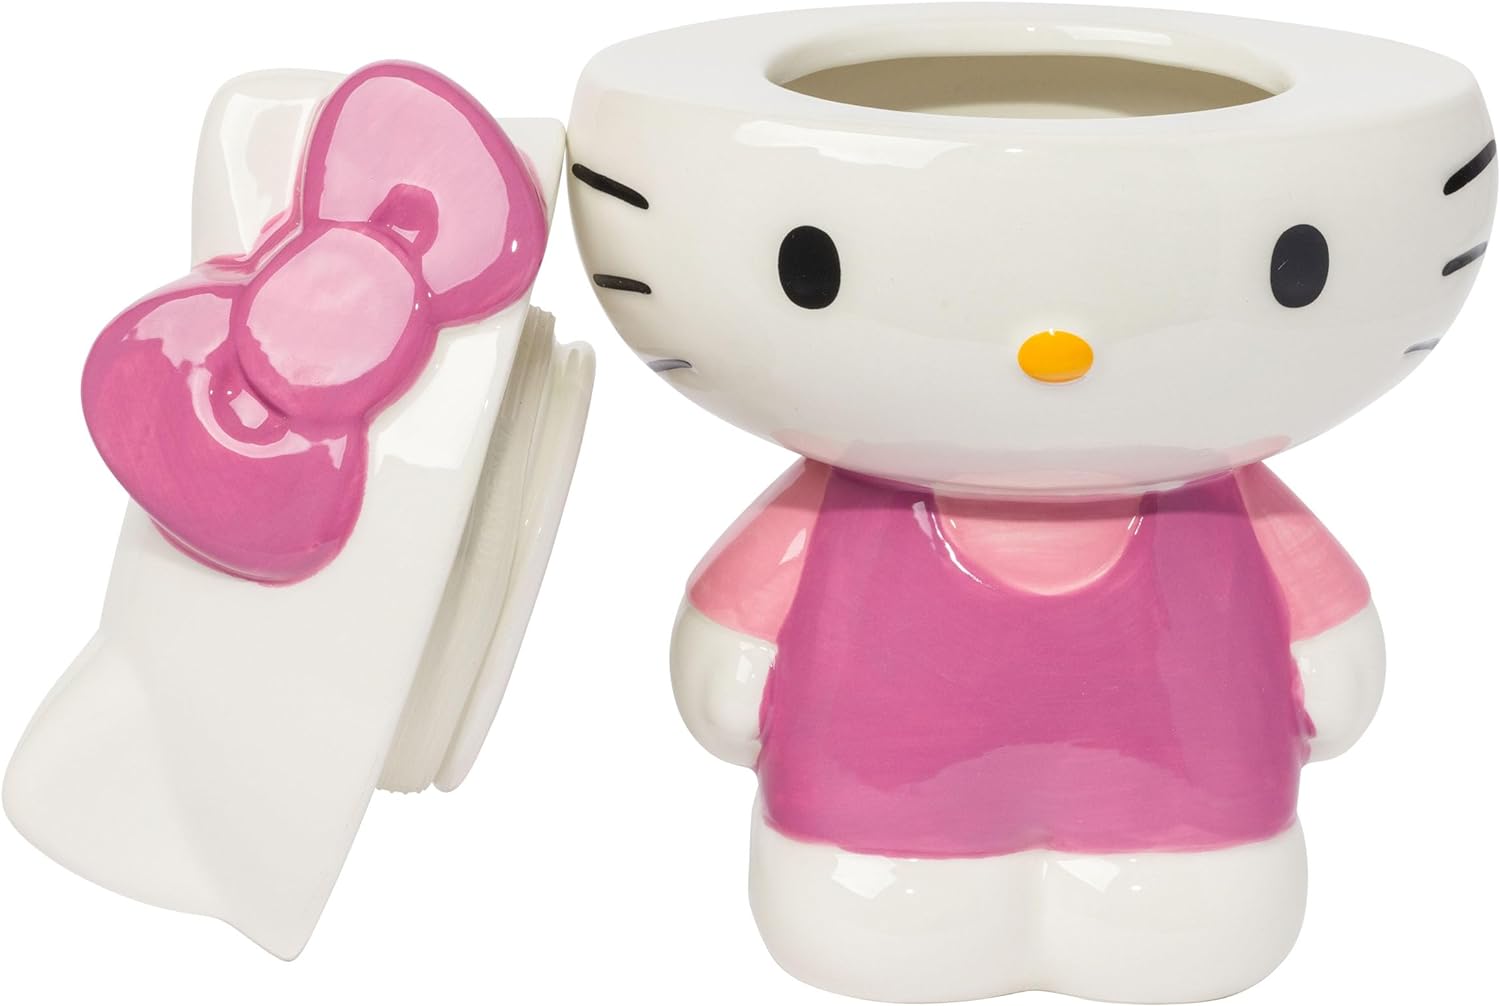 Cookie Jar - Hello Kitty - 7.09"-hotRAGS.com